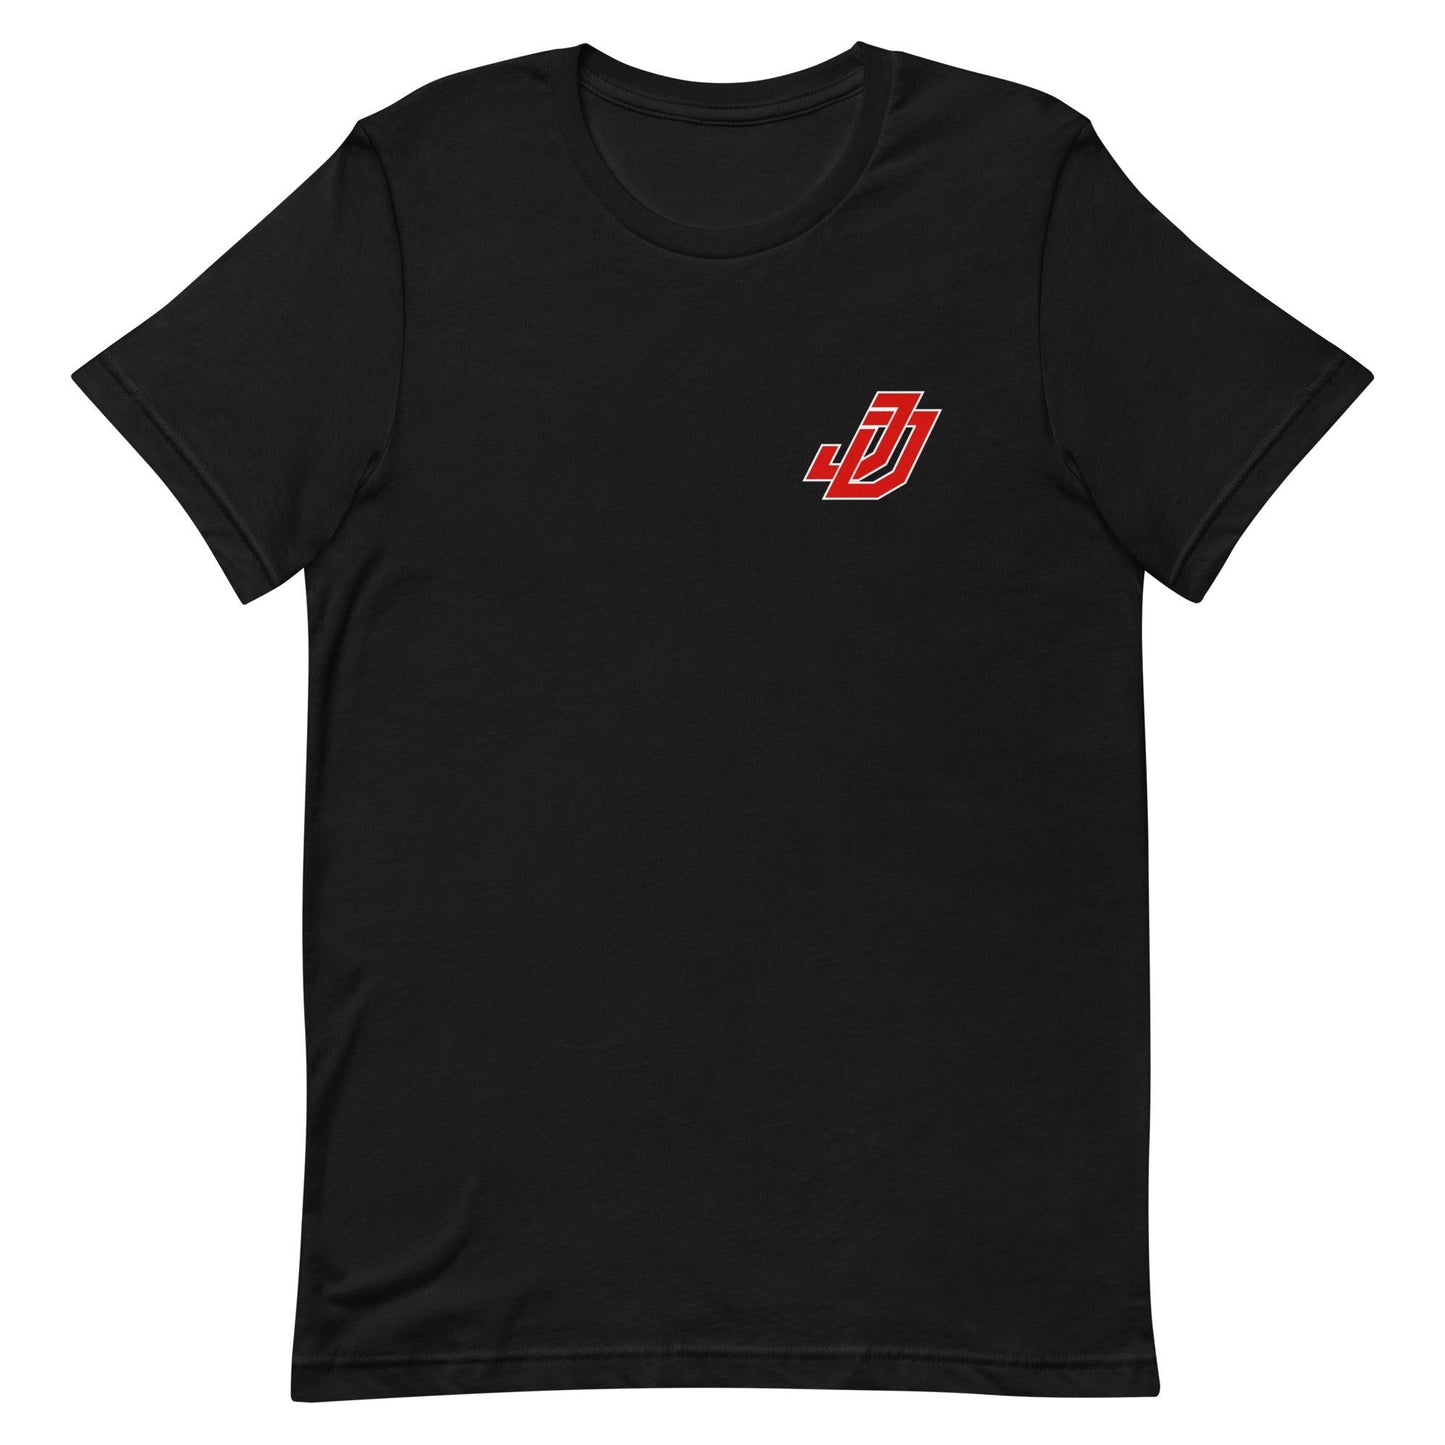 Johnnie Dixon "Essential" t-shirt - Fan Arch